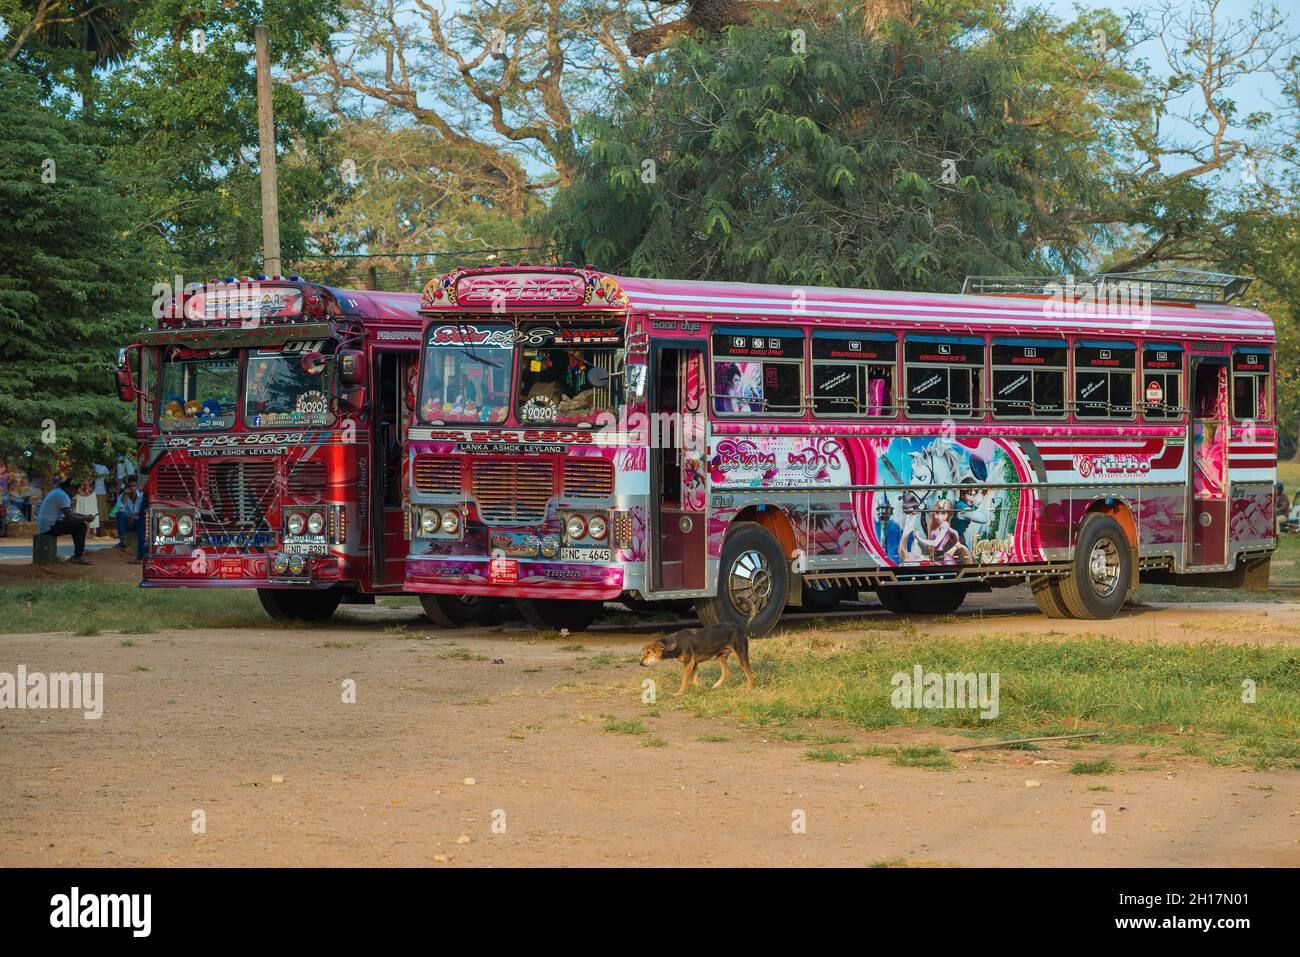 ANURADHAPURA, SRI LANKA - FEBRUARY 04, 2020: Two tourist buses 'Lanka Ashok Leyland' on a sunny day Stock Photo